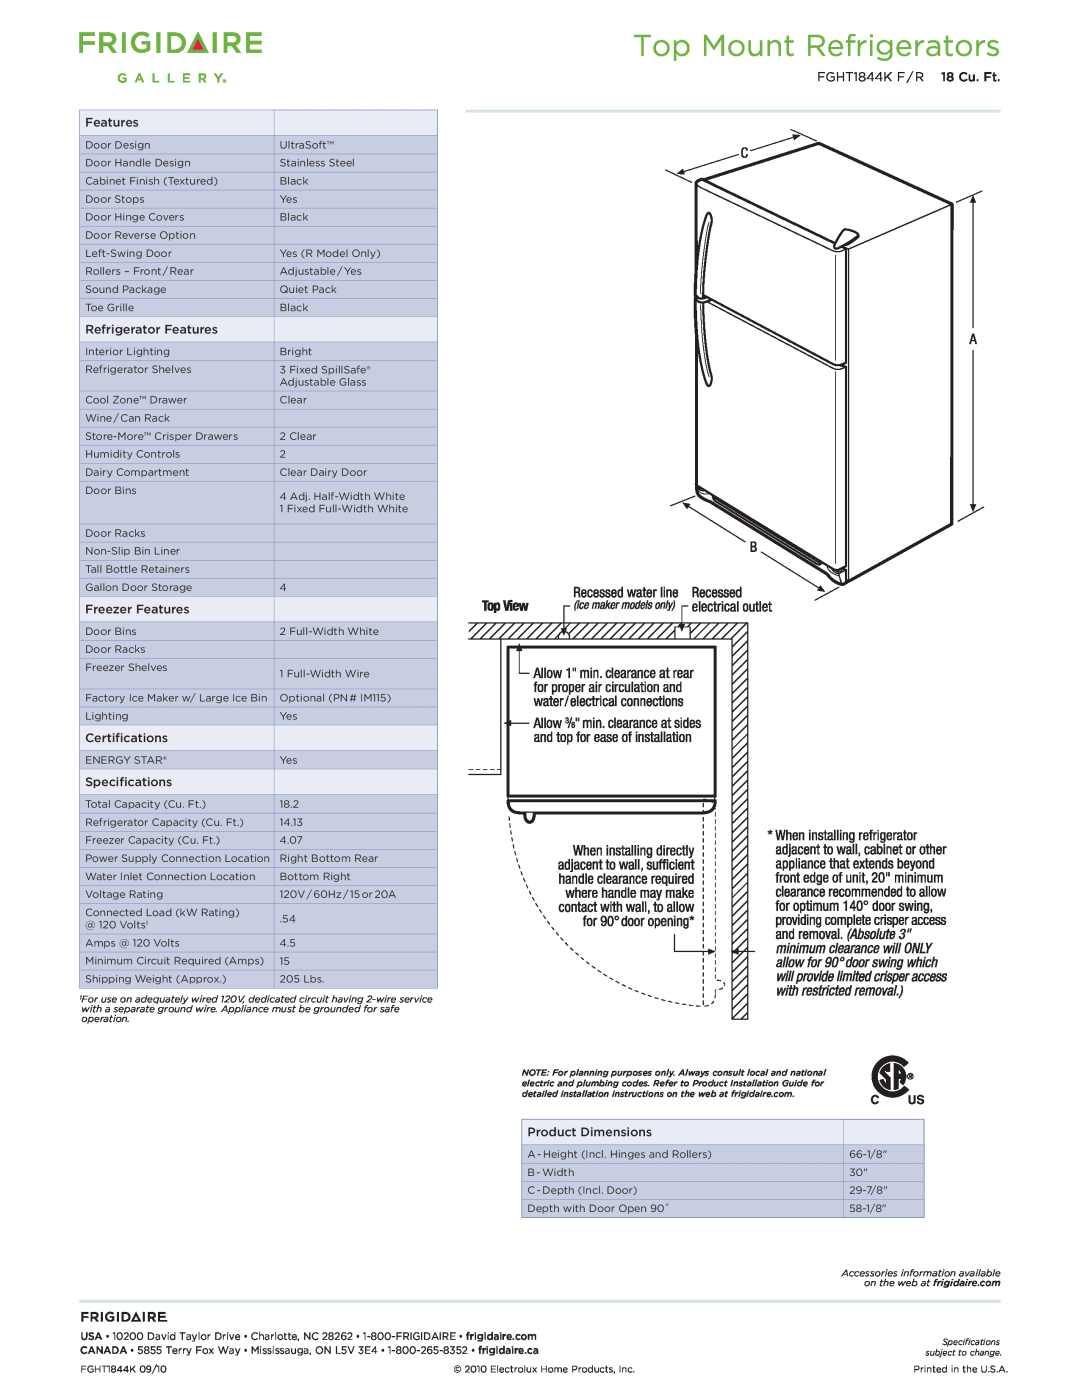 Frigidaire FGHT1844K F/R1 dimensions Top Mount Refrigerators, FGHT1844K F / R 18 Cu. Ft 